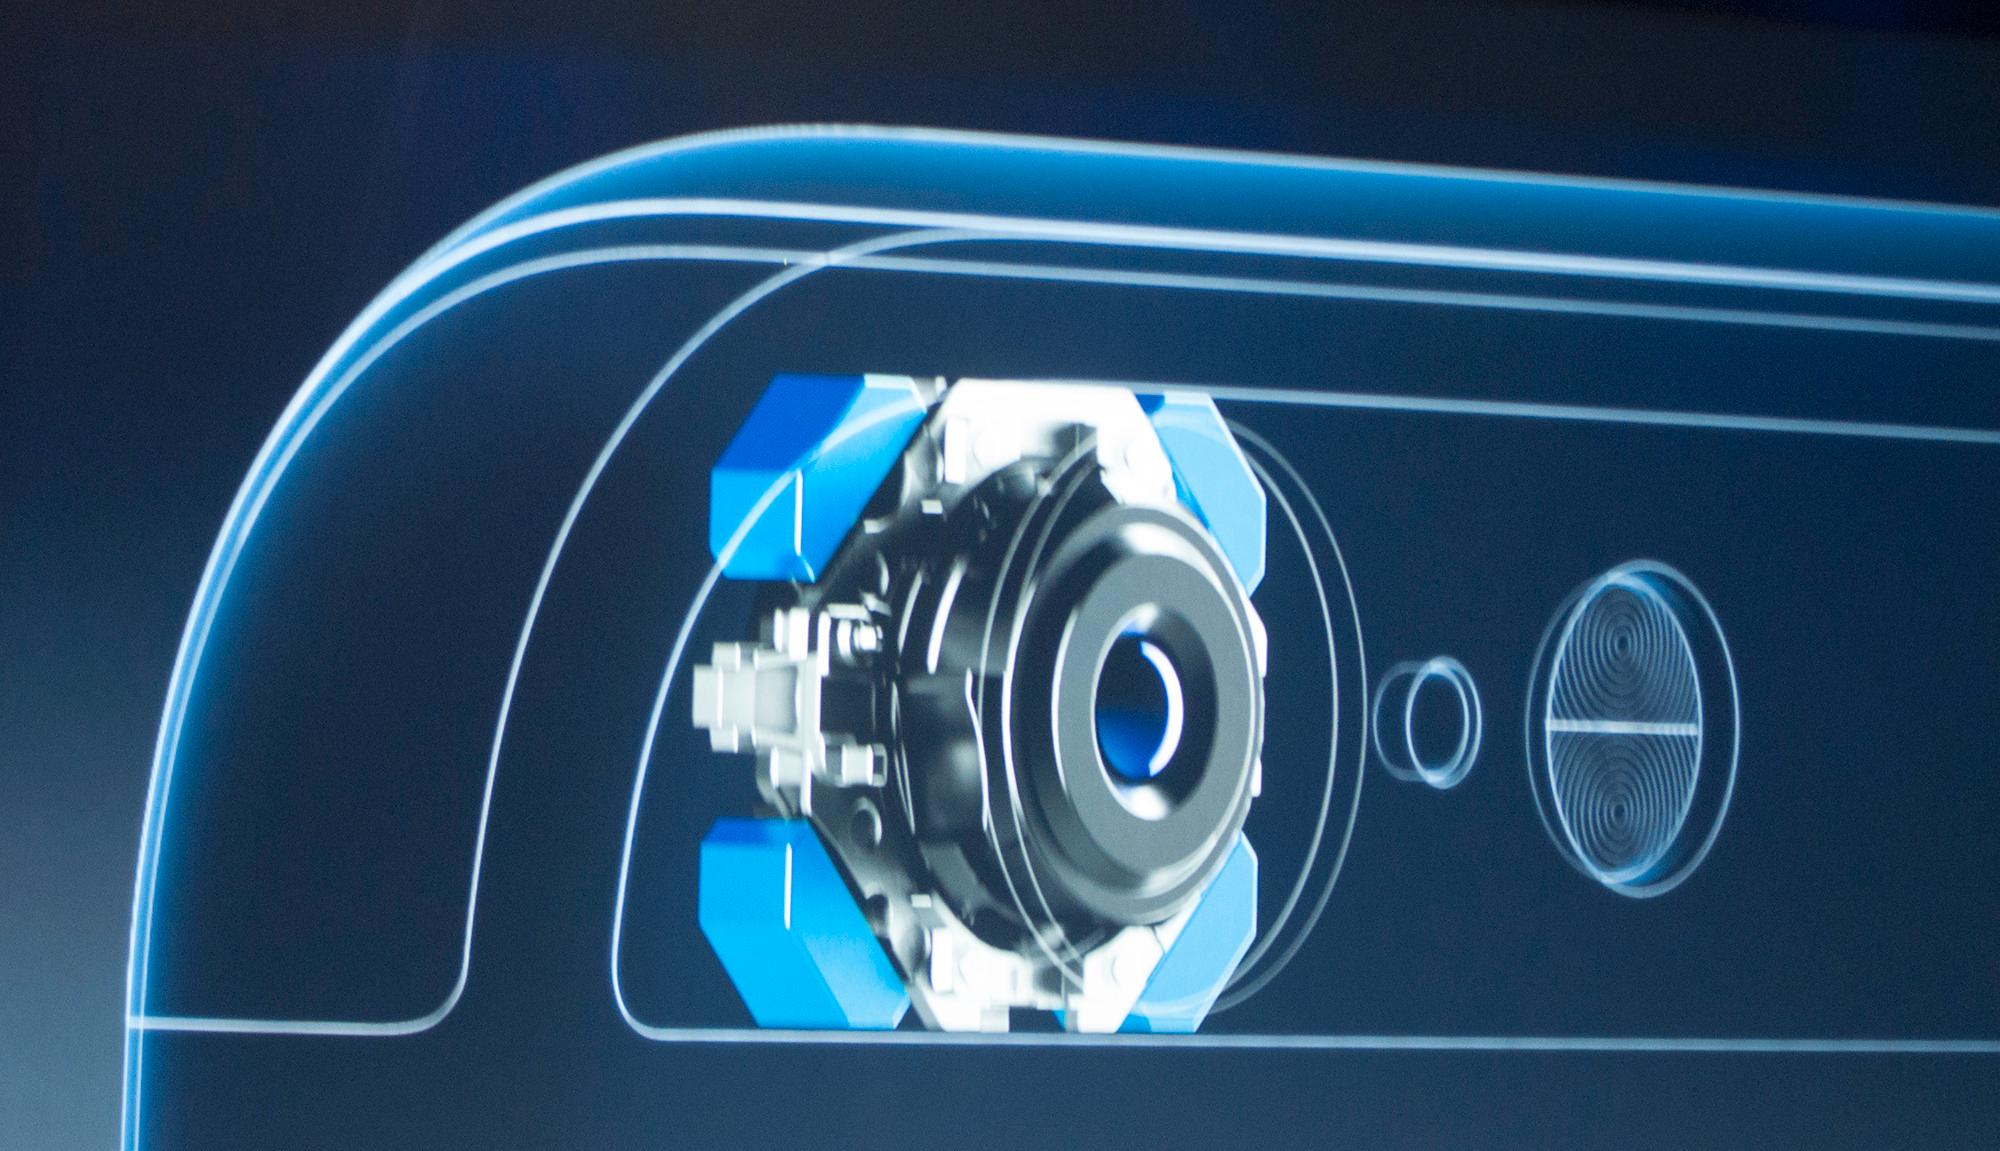 iPhone 6 Plus har optisk bildestabilisator.Foto: Finn Jarle Kvalheim, Tek.no